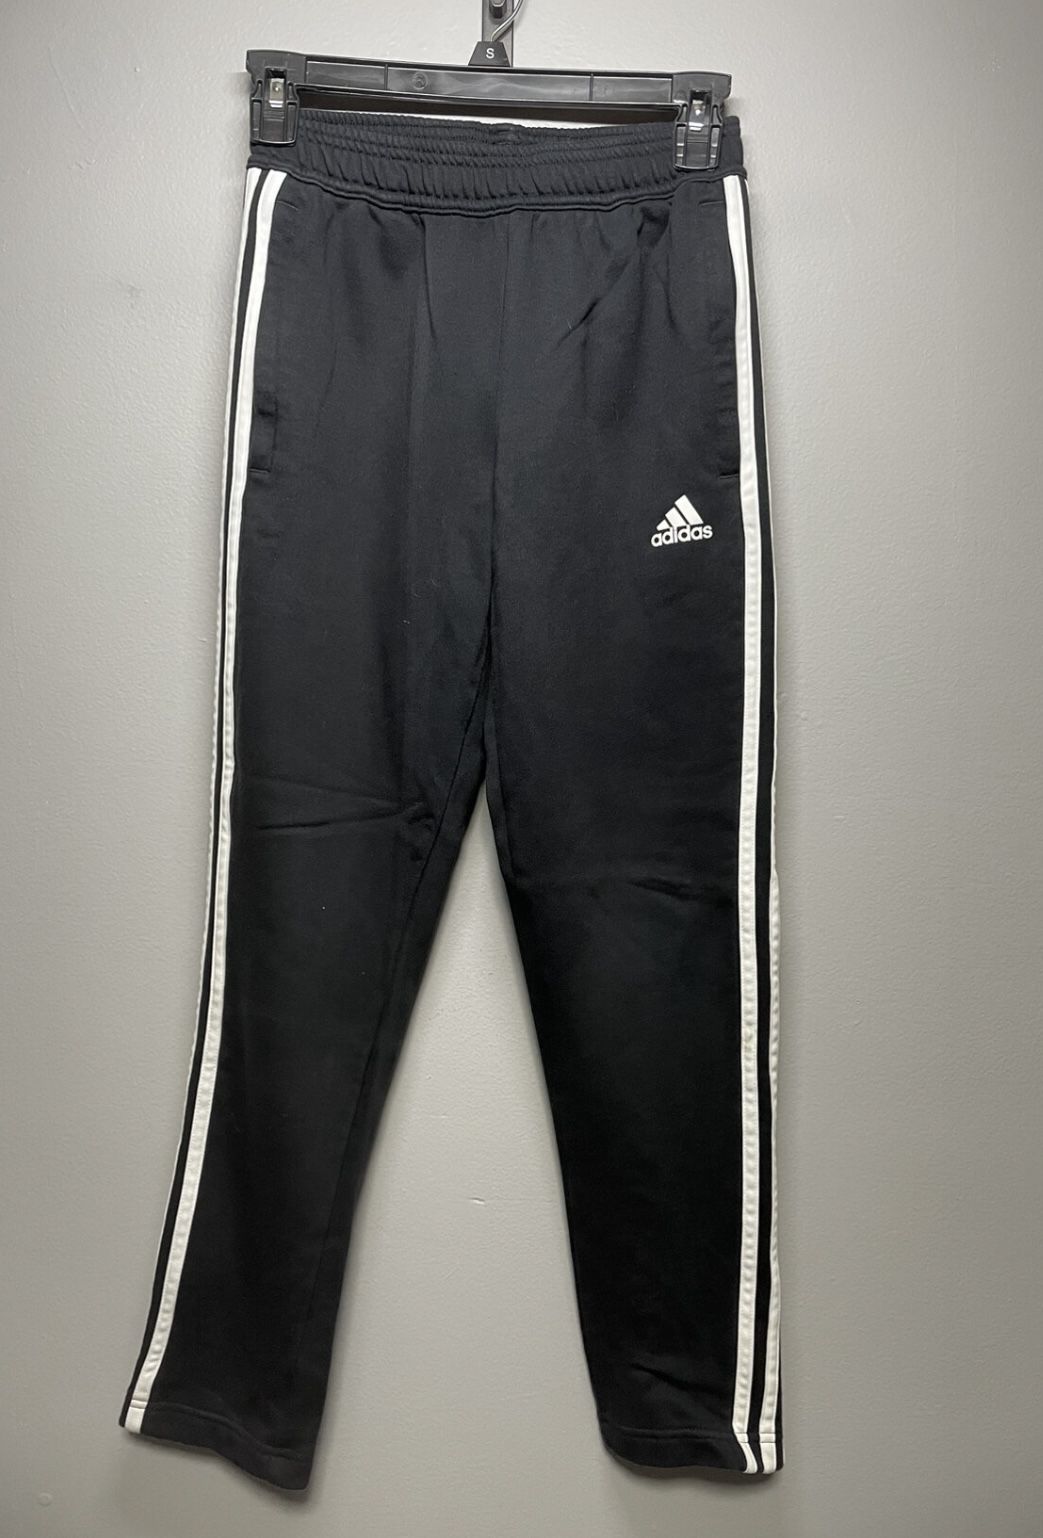 Adidas Boys Joggers Size M (10/12)